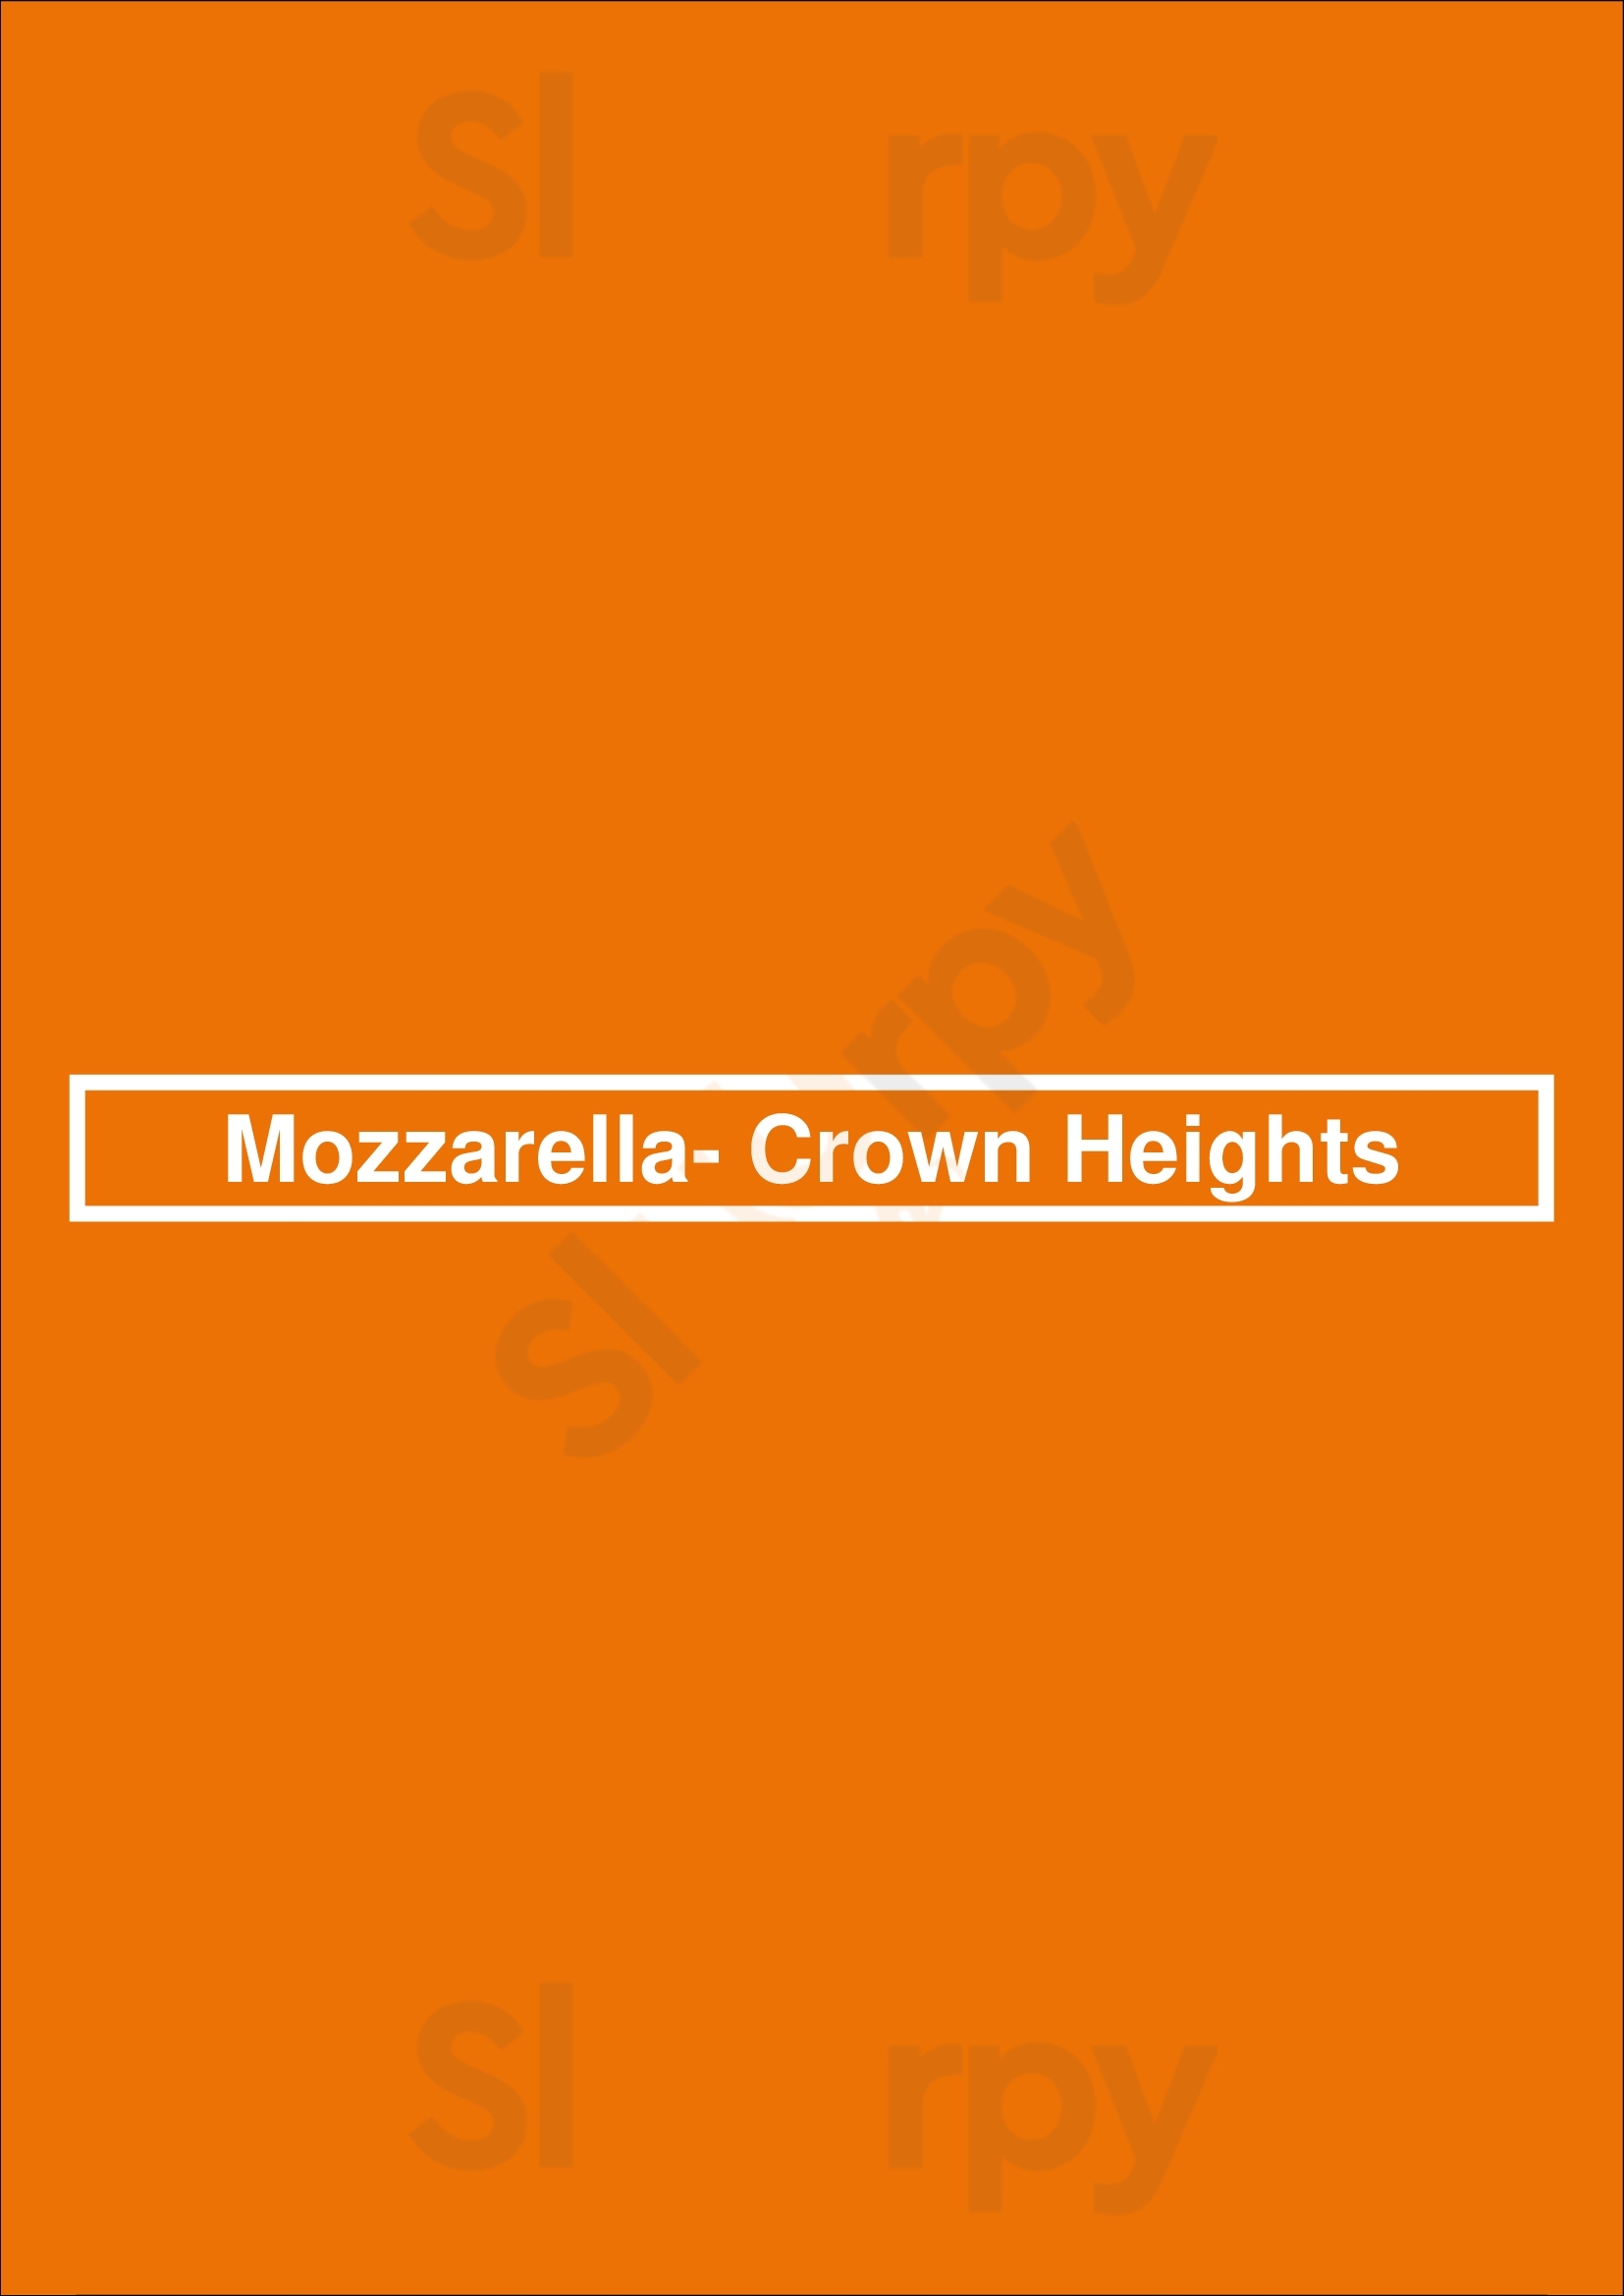 Mozzarella- Crown Heights Brooklyn Menu - 1